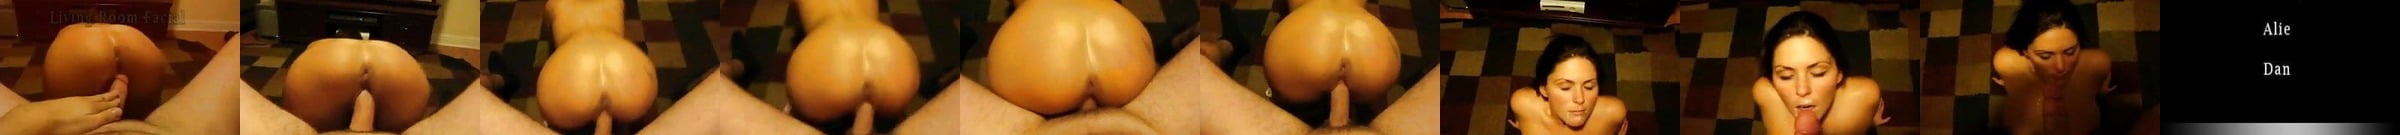 Hot Texas Slut Getting Fucked Free Free Slut Porn Video 2c